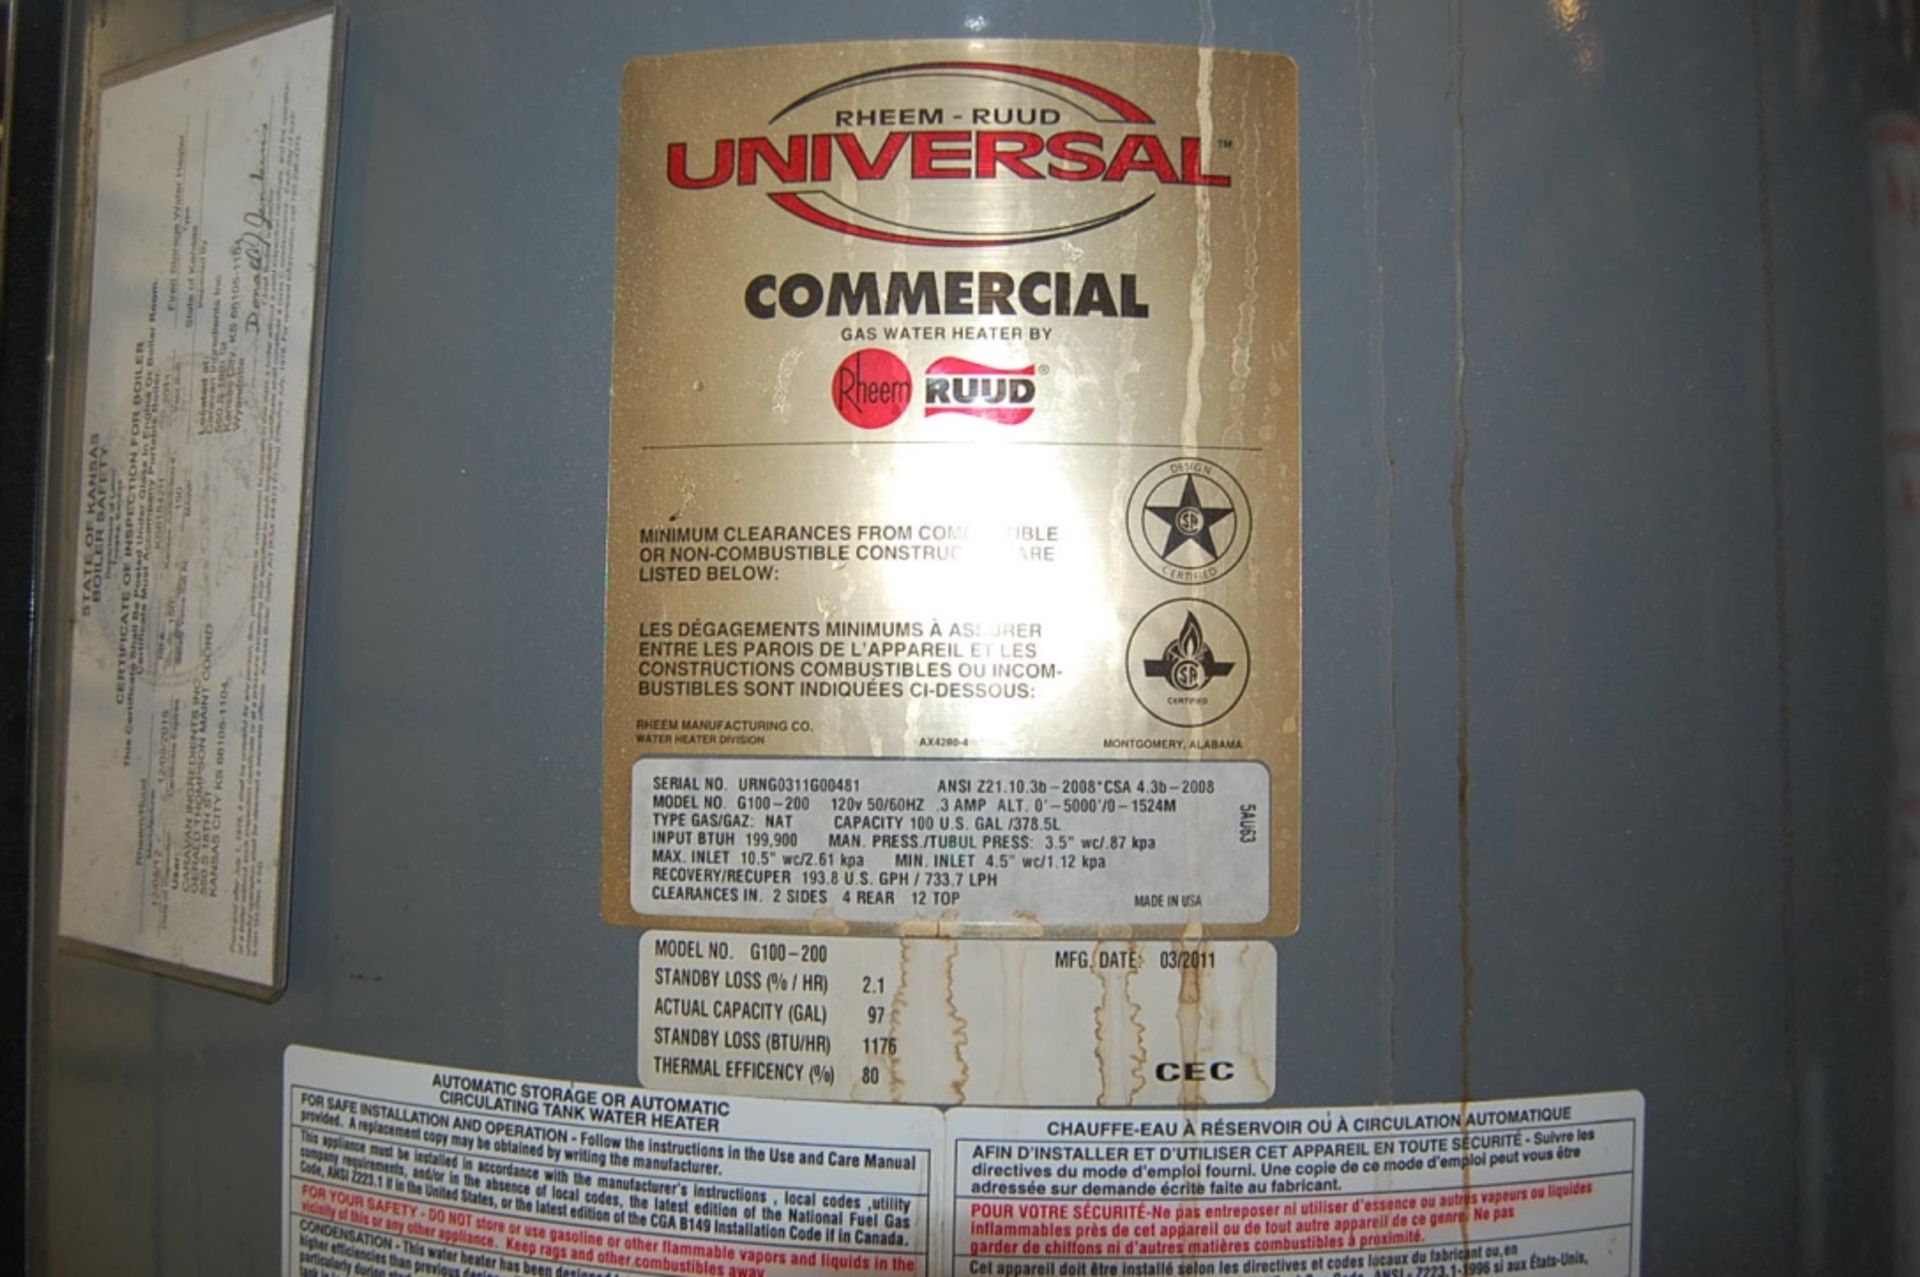 (2) Rheem Rudd Universal Commercial Gas Hot Water Heaters Model #G-100-200 LOADING FEE: $900 - Image 2 of 2